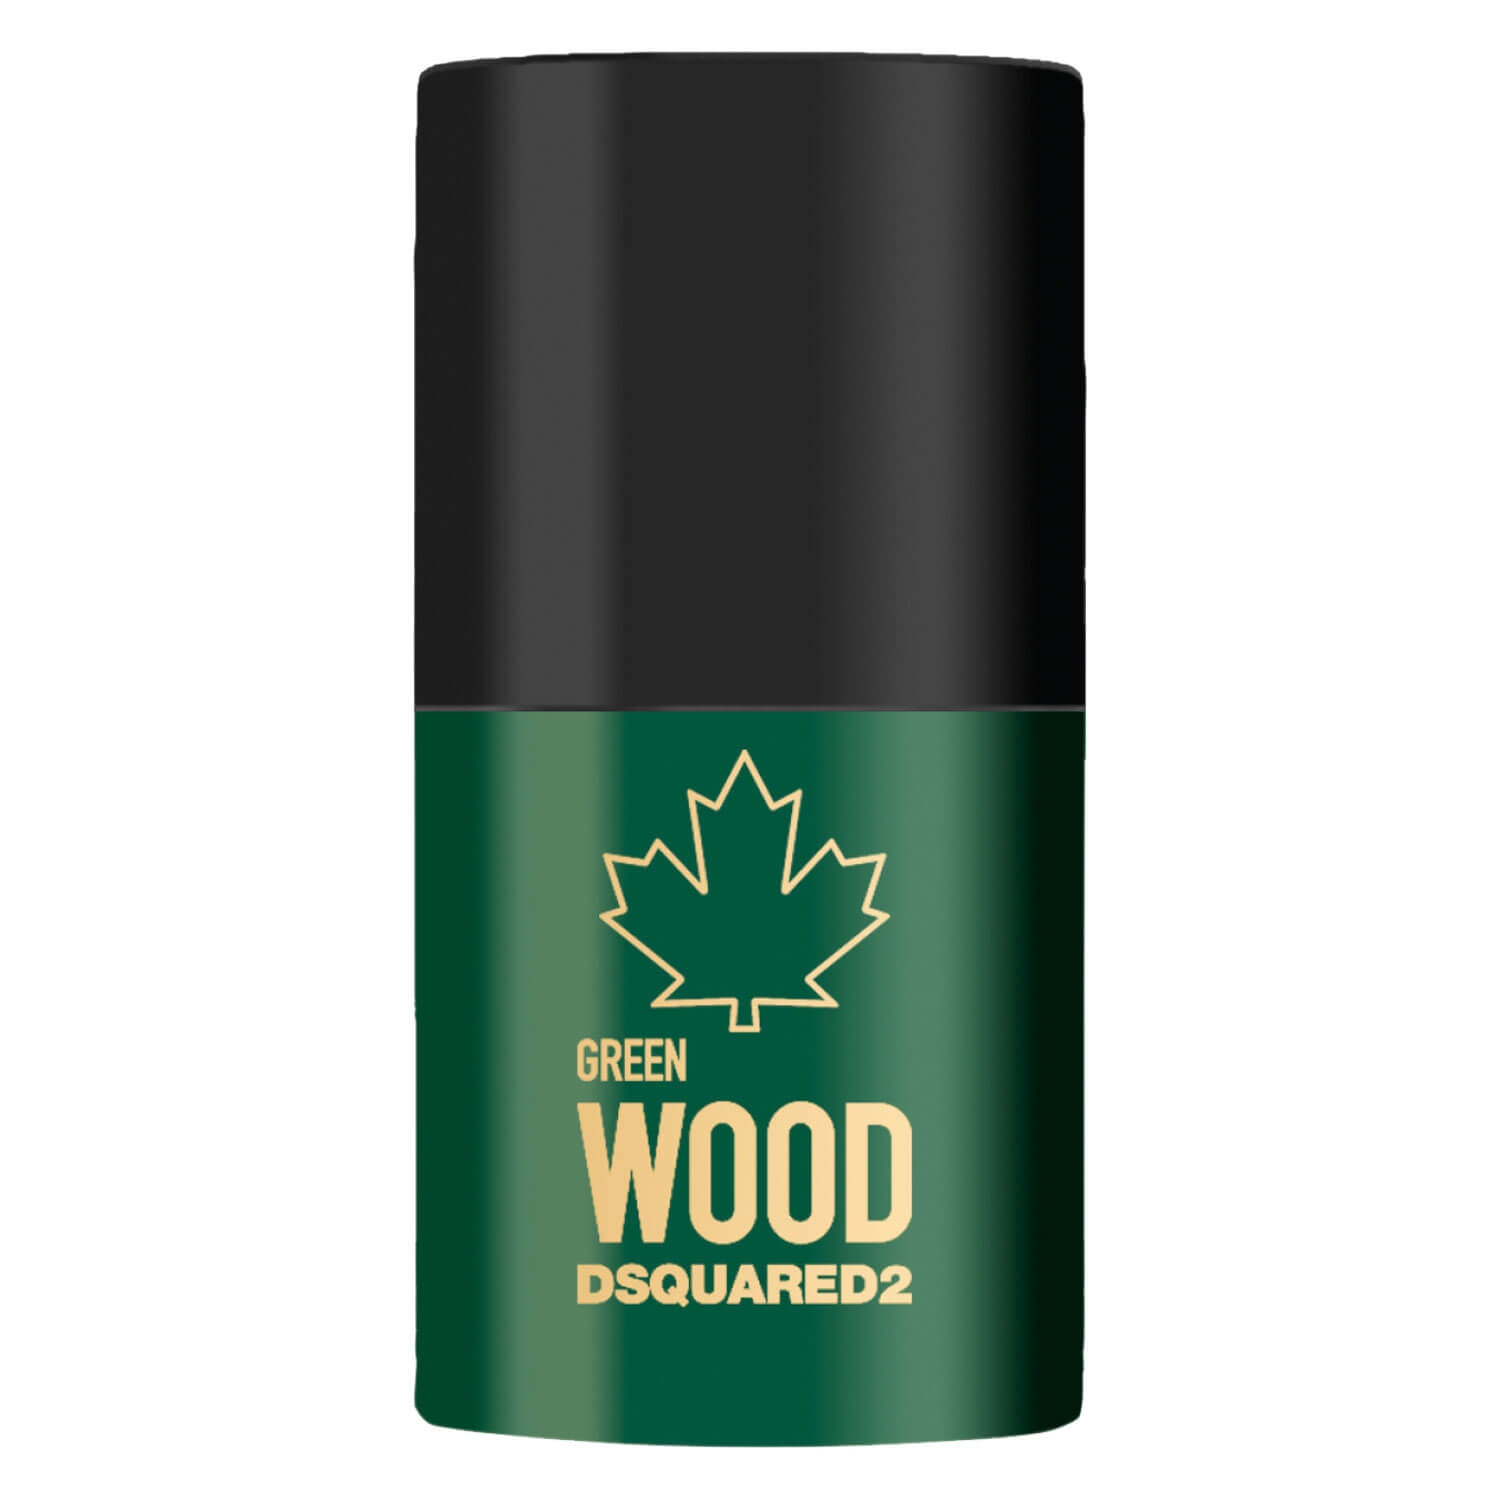 Produktbild von DSQUARED2 WOOD - Green Pour Homme Deodorant Stick